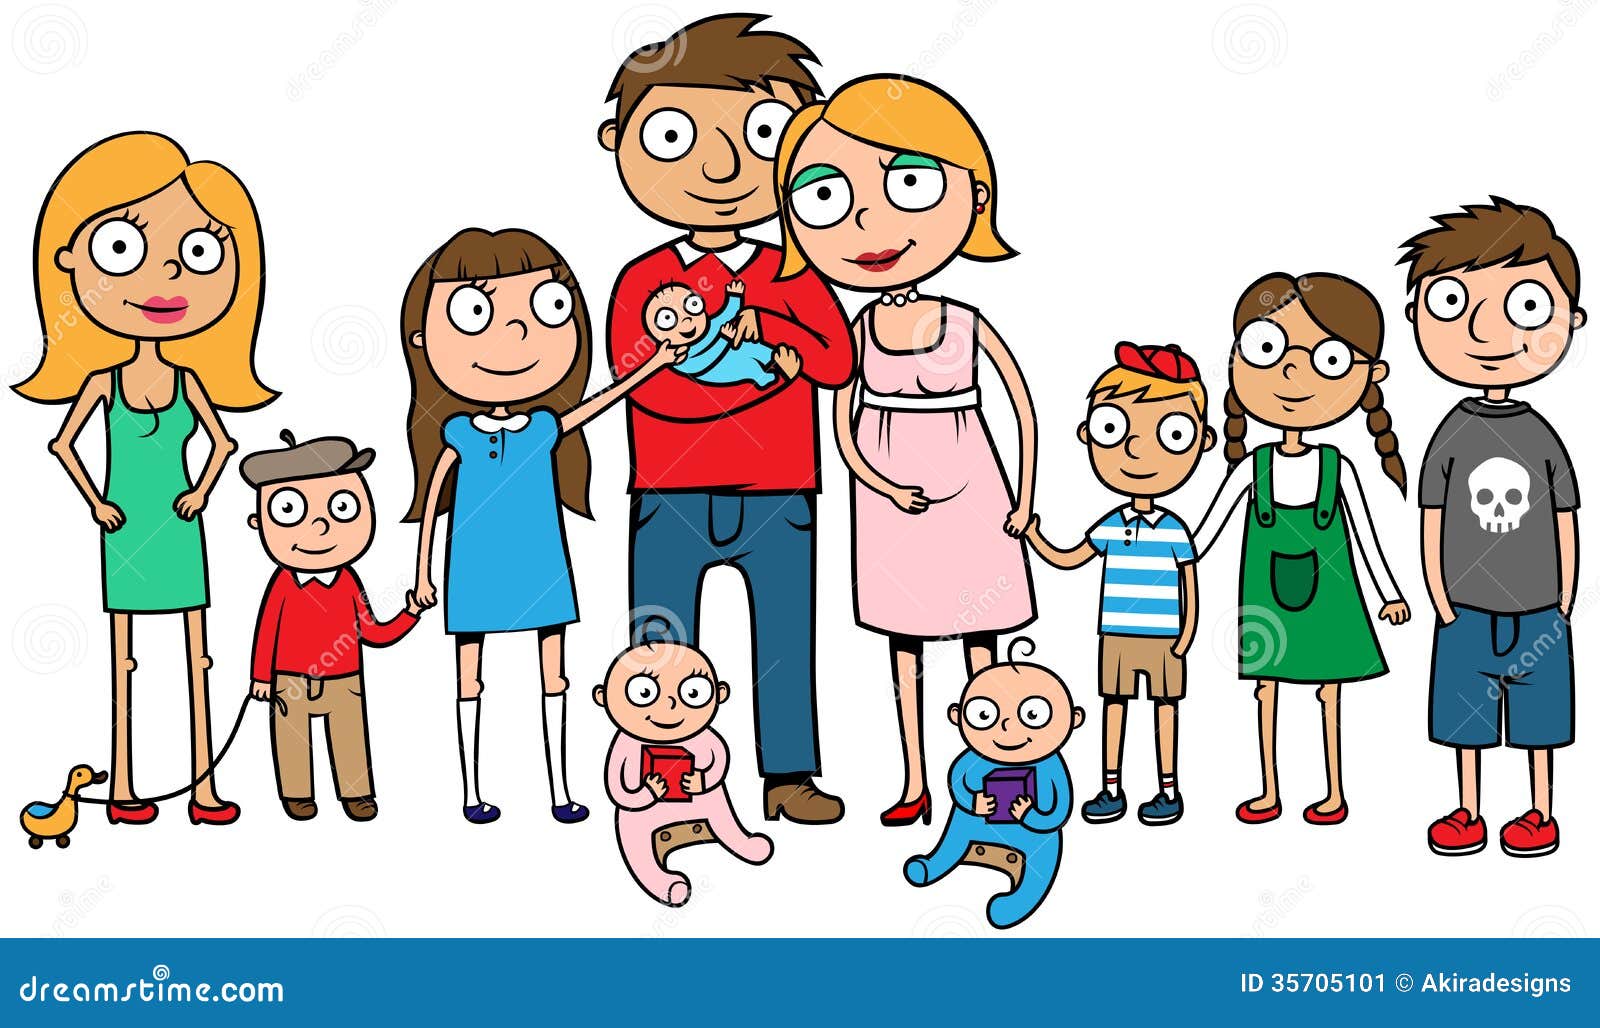 Large Family With Many Children Stock Image - Image: 35705101